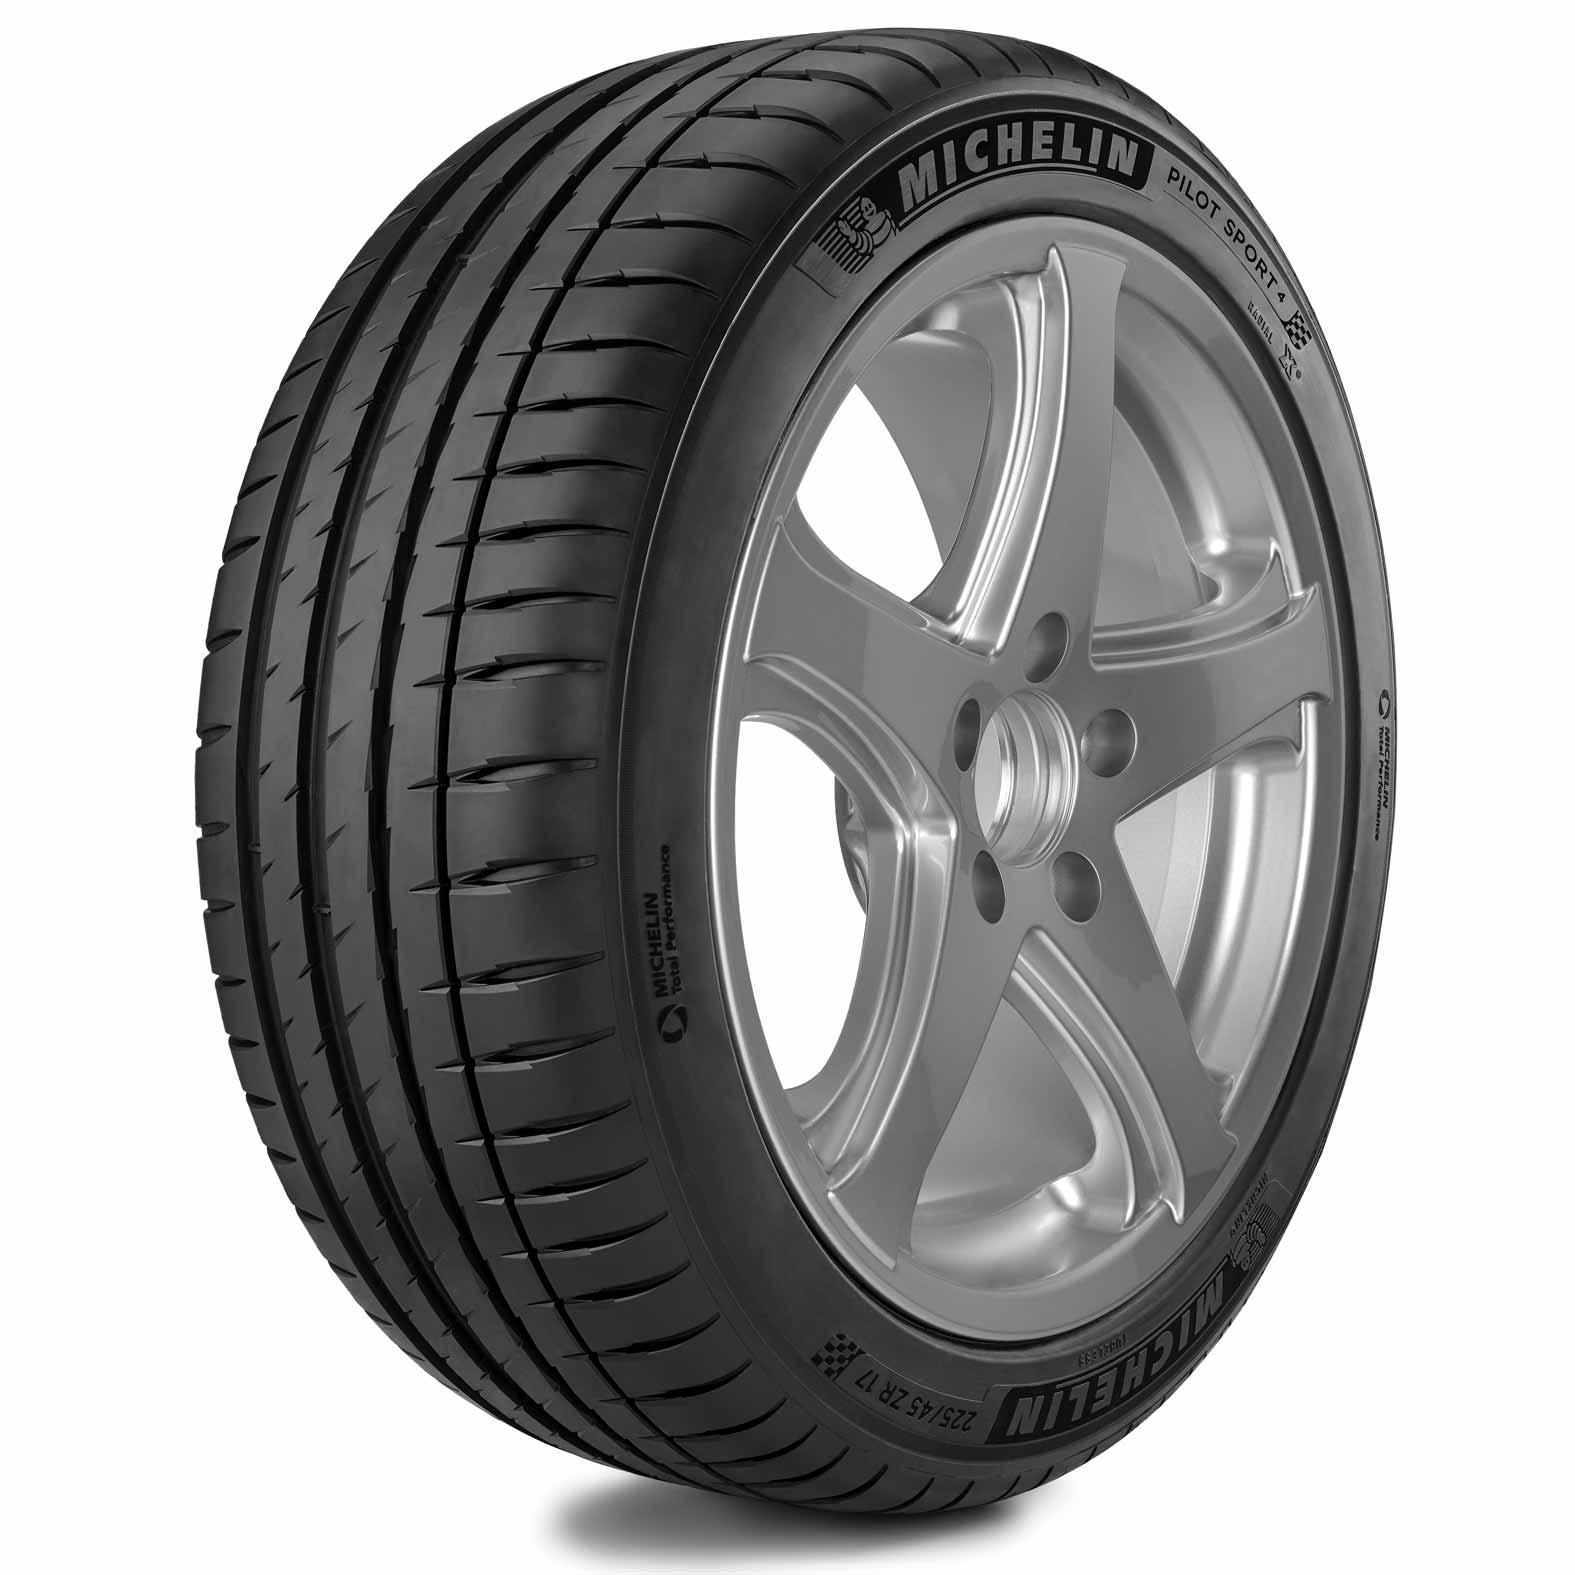 Michelin Pilot Sport 4 Tires for Performance | Kal Tire